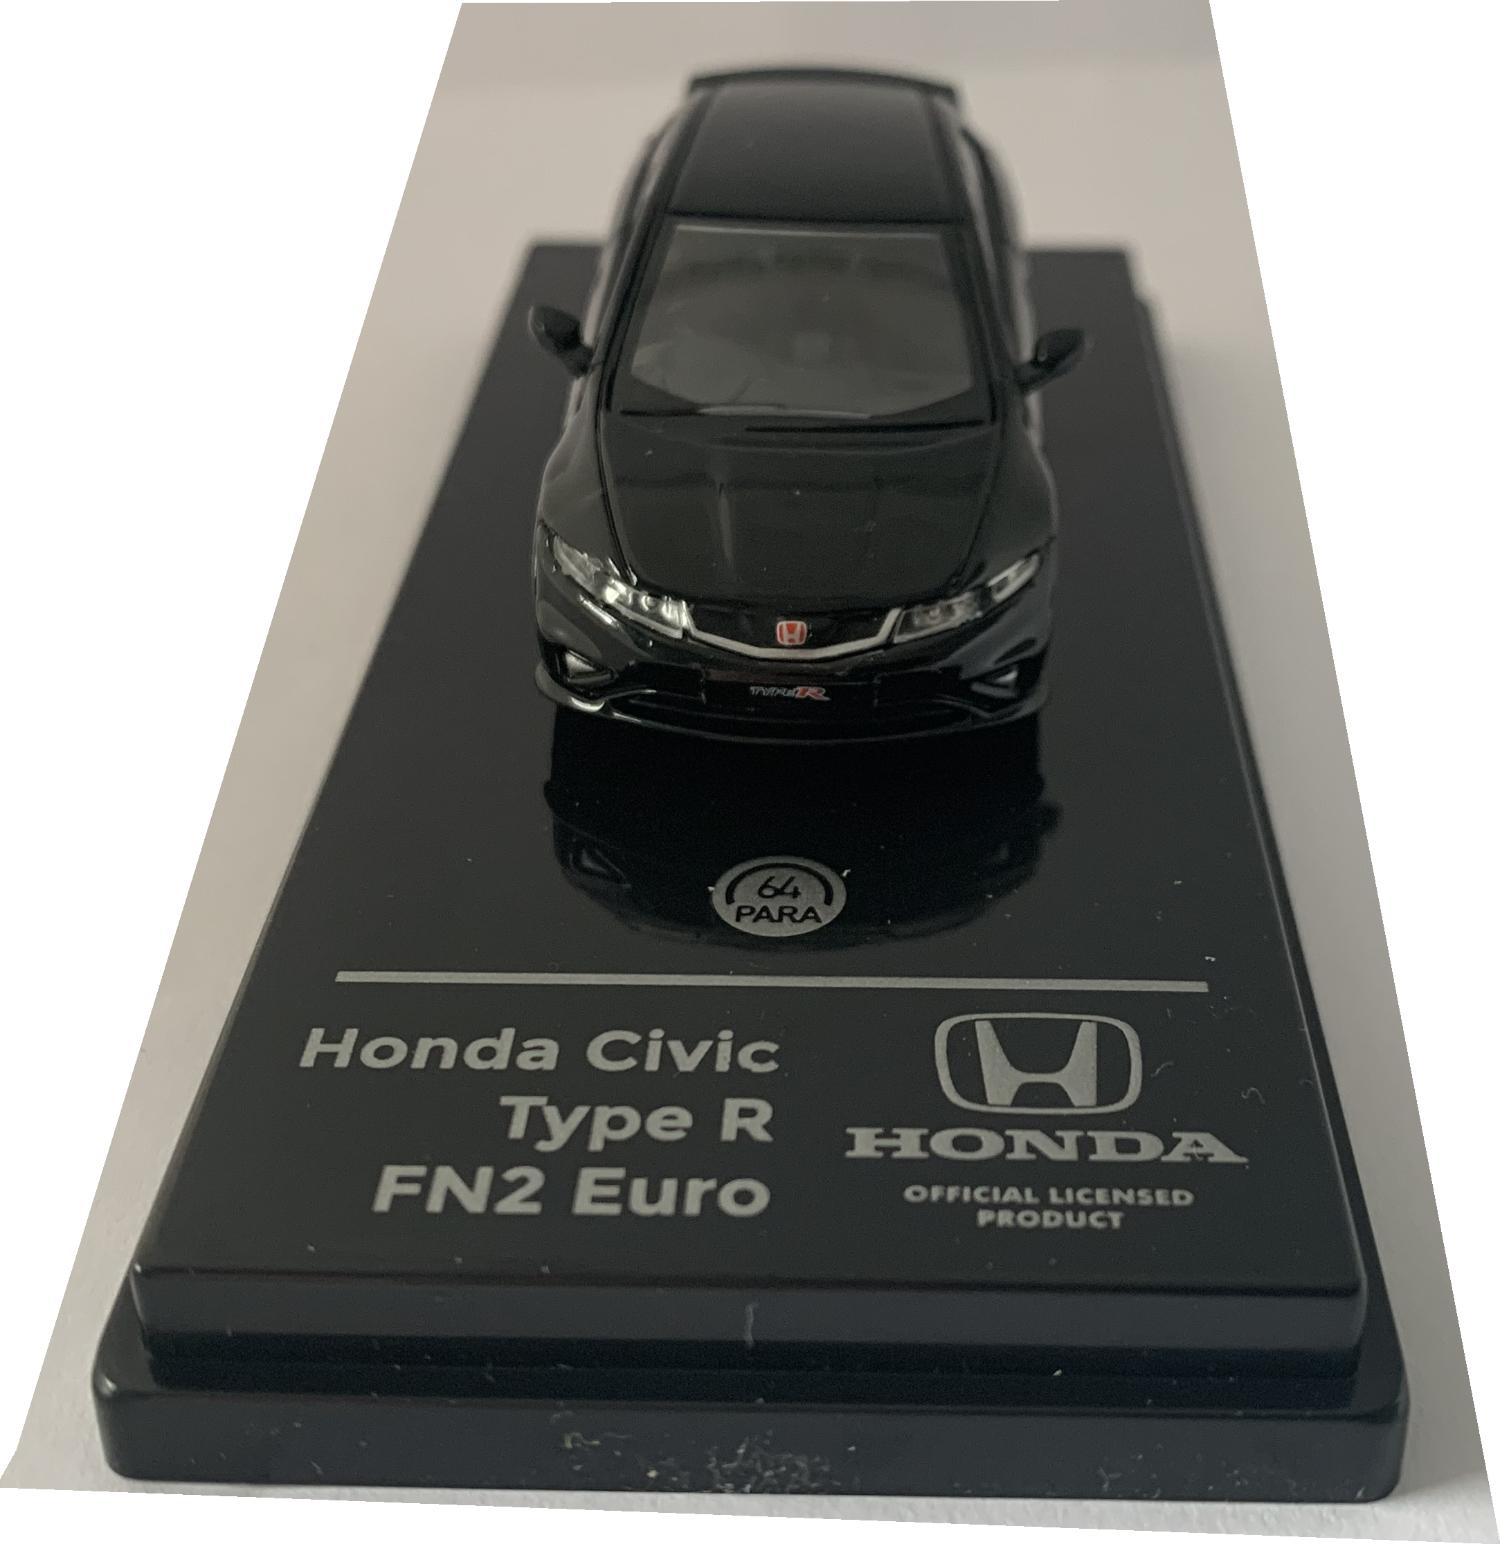 Honda Civic Type R FN2 Euro  2007, nighthawk black 1:64 scale model from Paragon Models